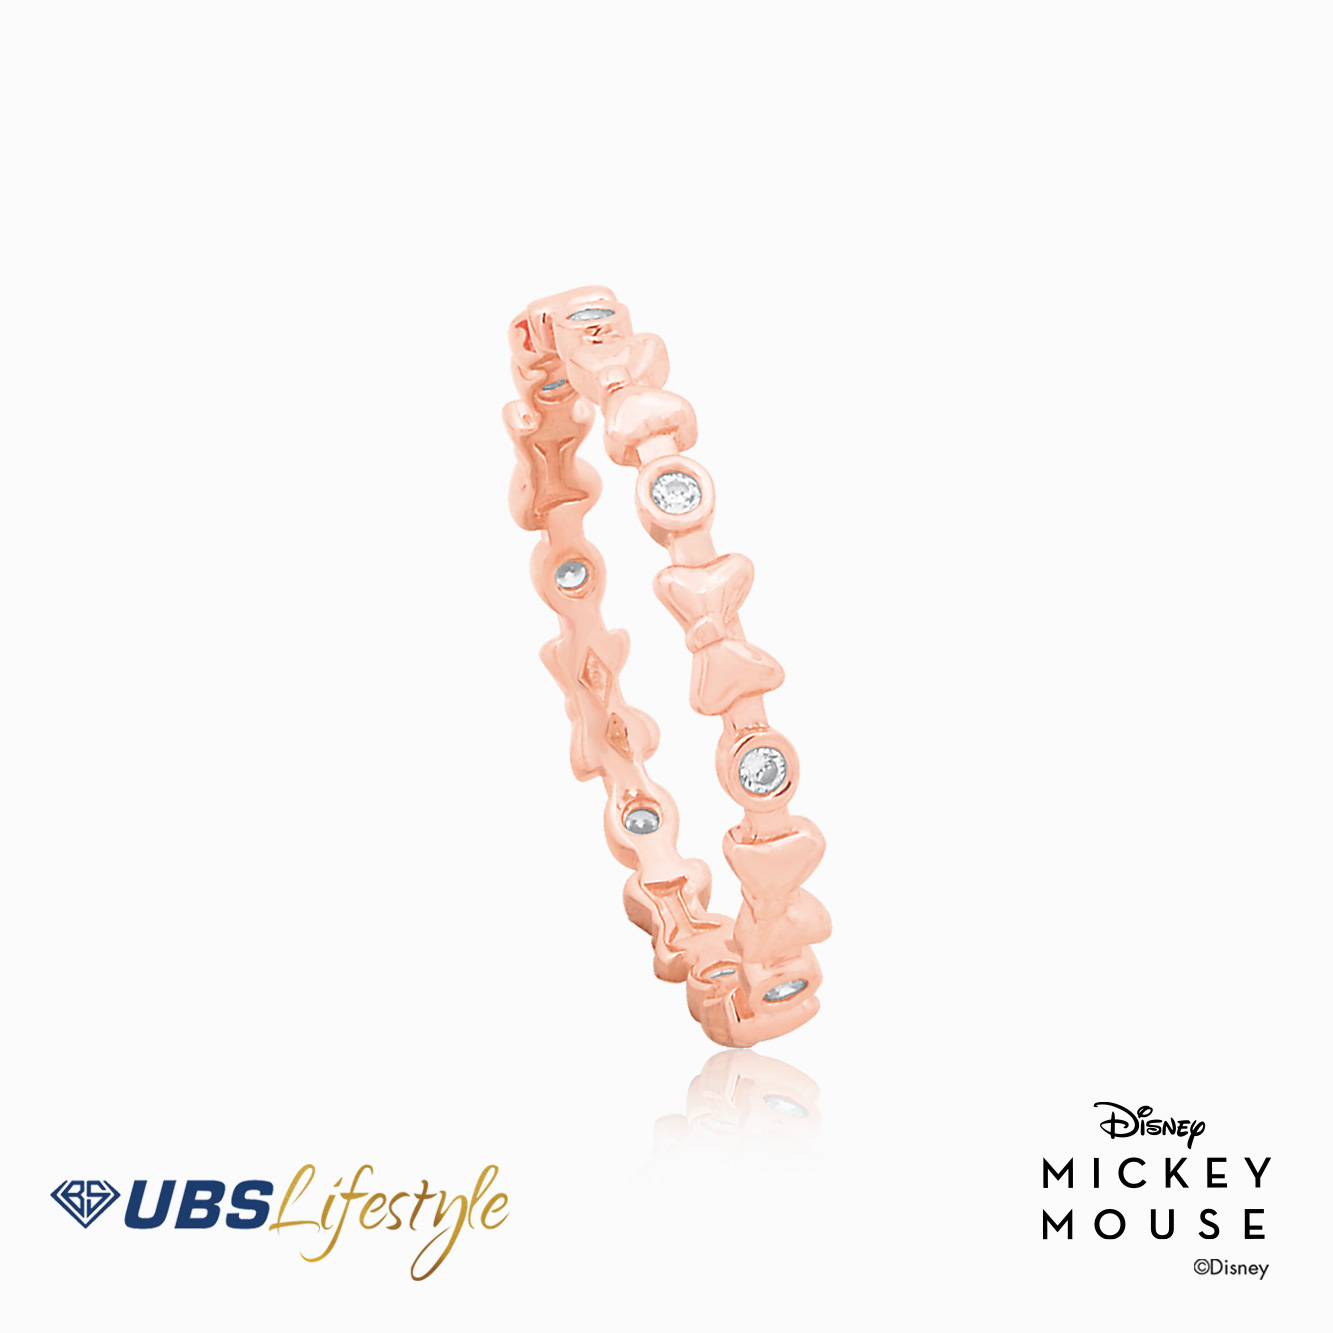 UBS Cincin Emas Disney Minnie Mouse - Ccy0130 - 17K